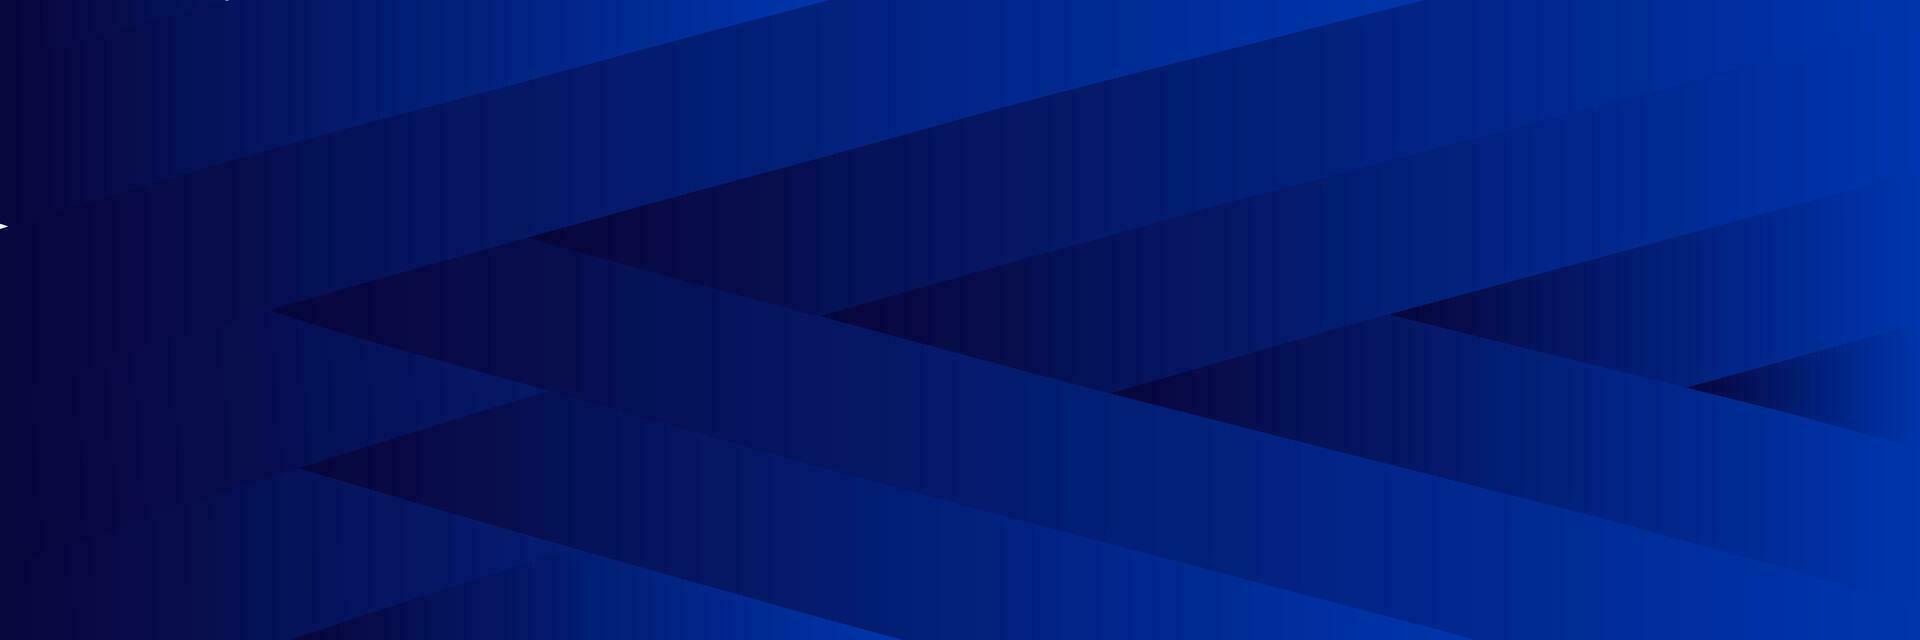 abstract elegant blue gradient background vector